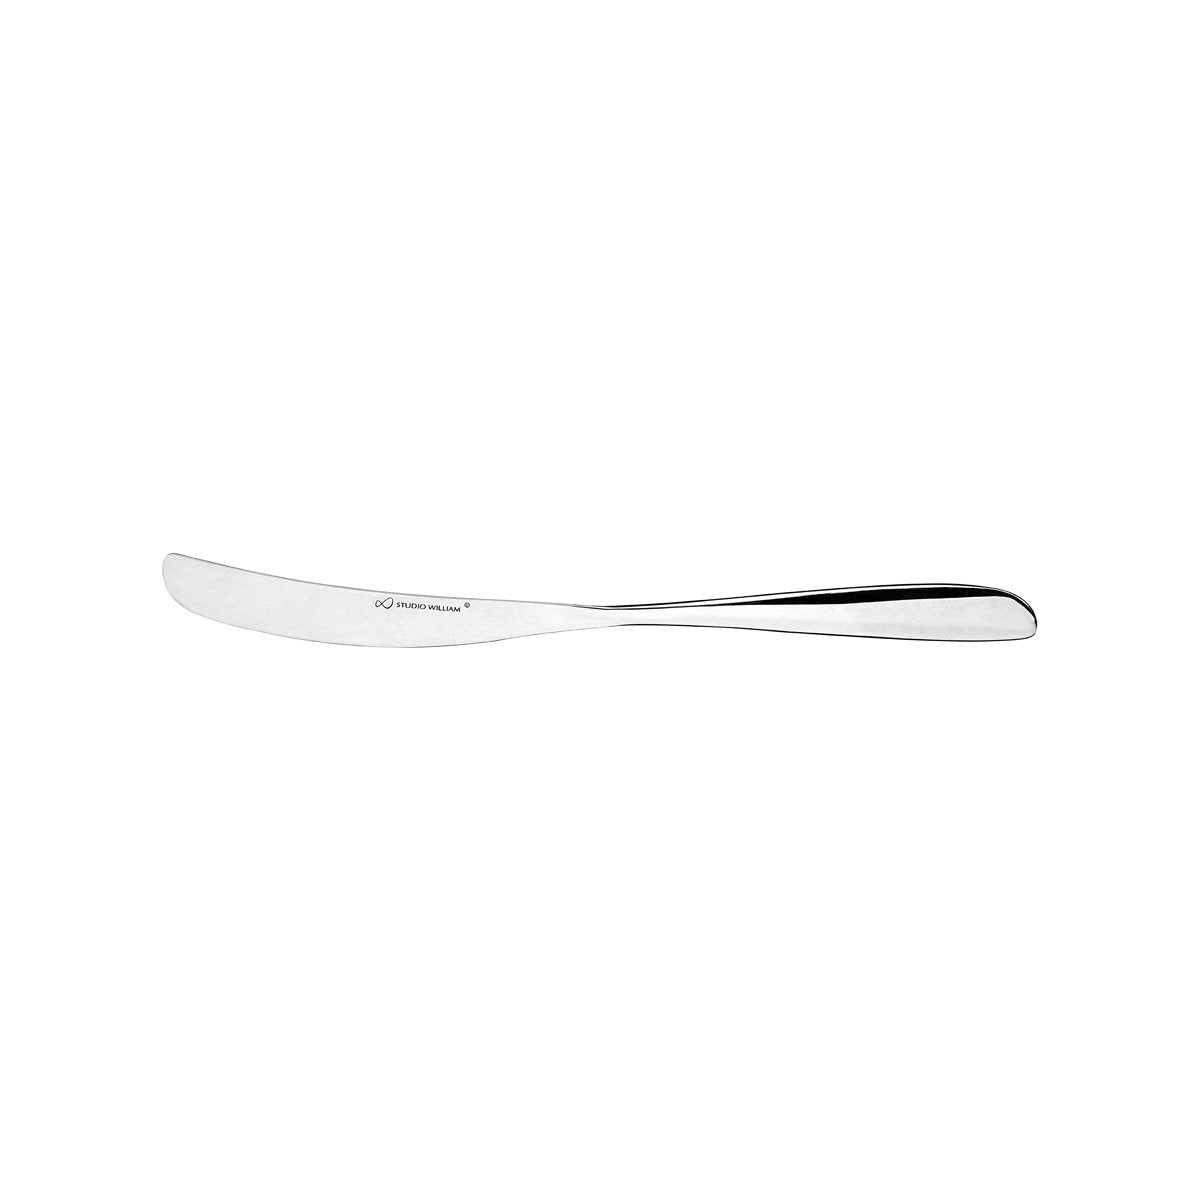 SWW-OLM01 Studio William Olive Mirror Table Knife Tomkin Australia Hospitality Supplies